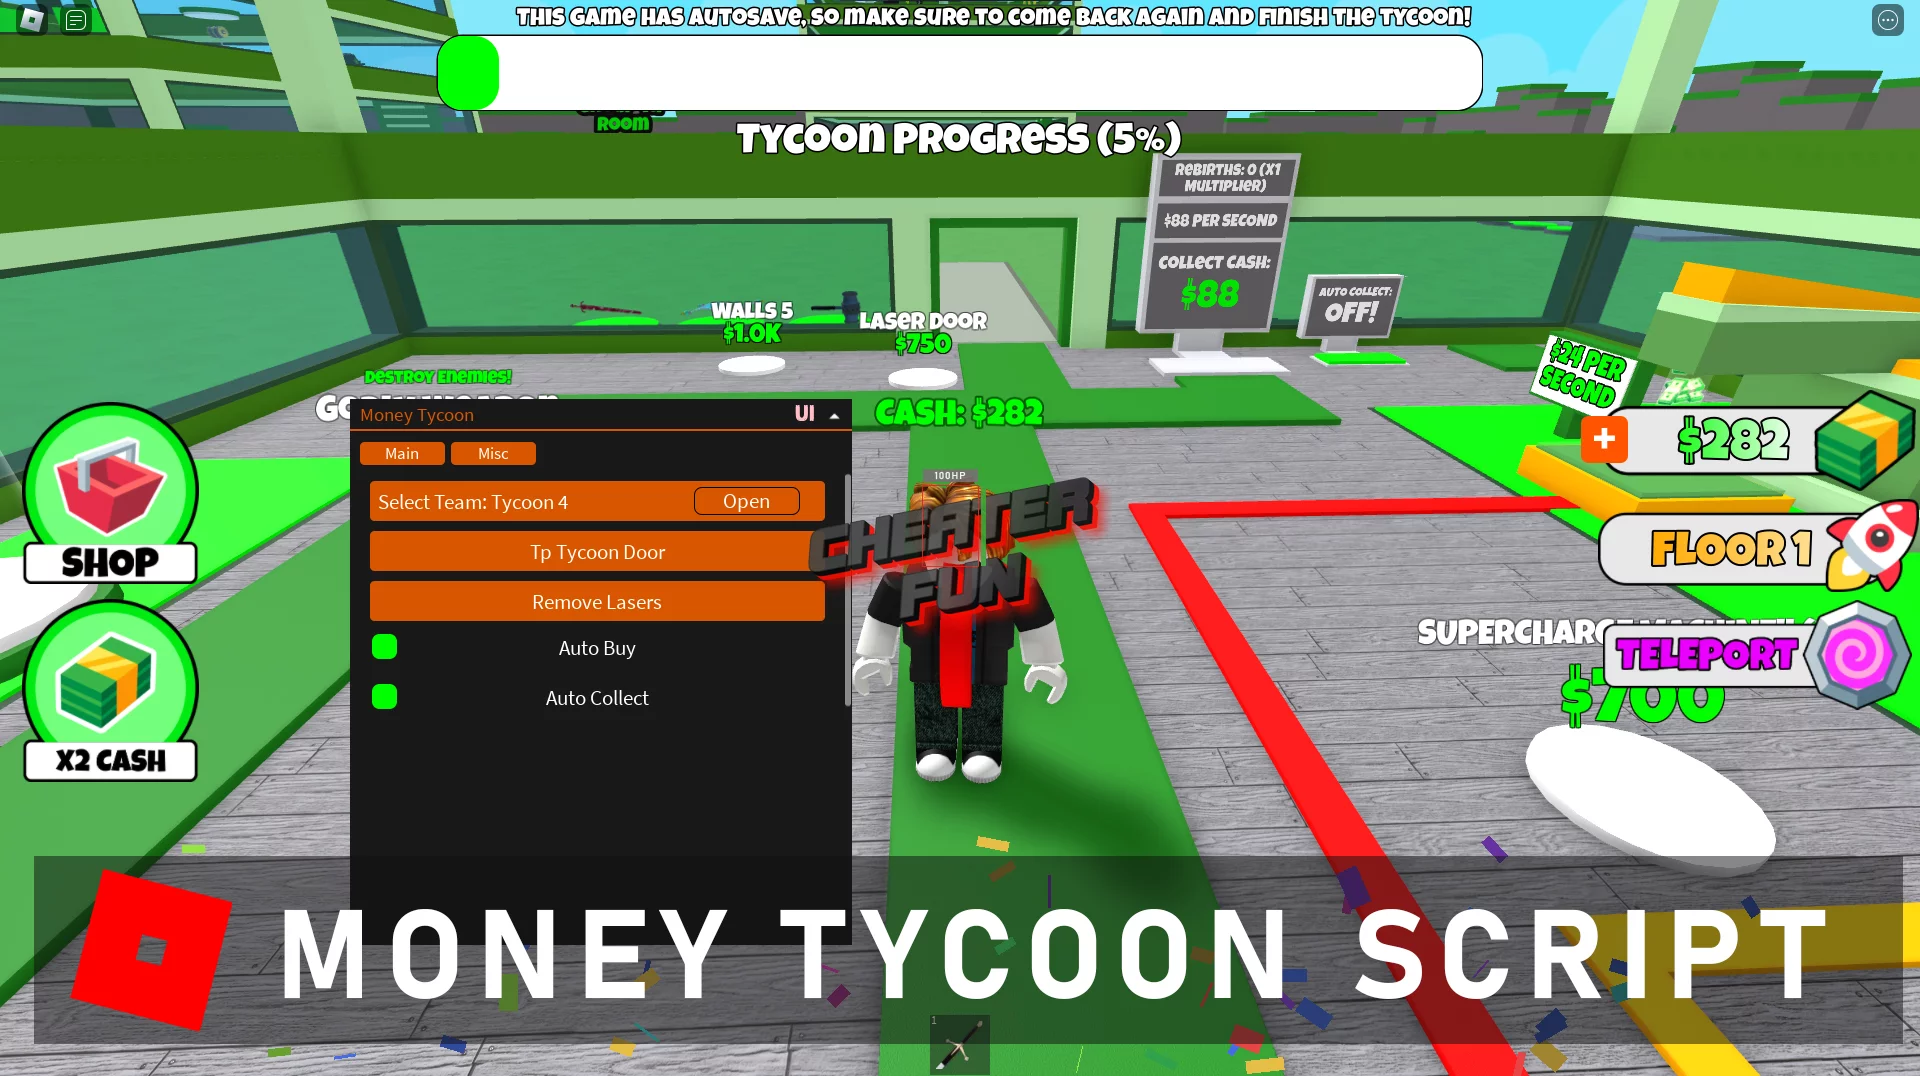 Money Tycoon Script